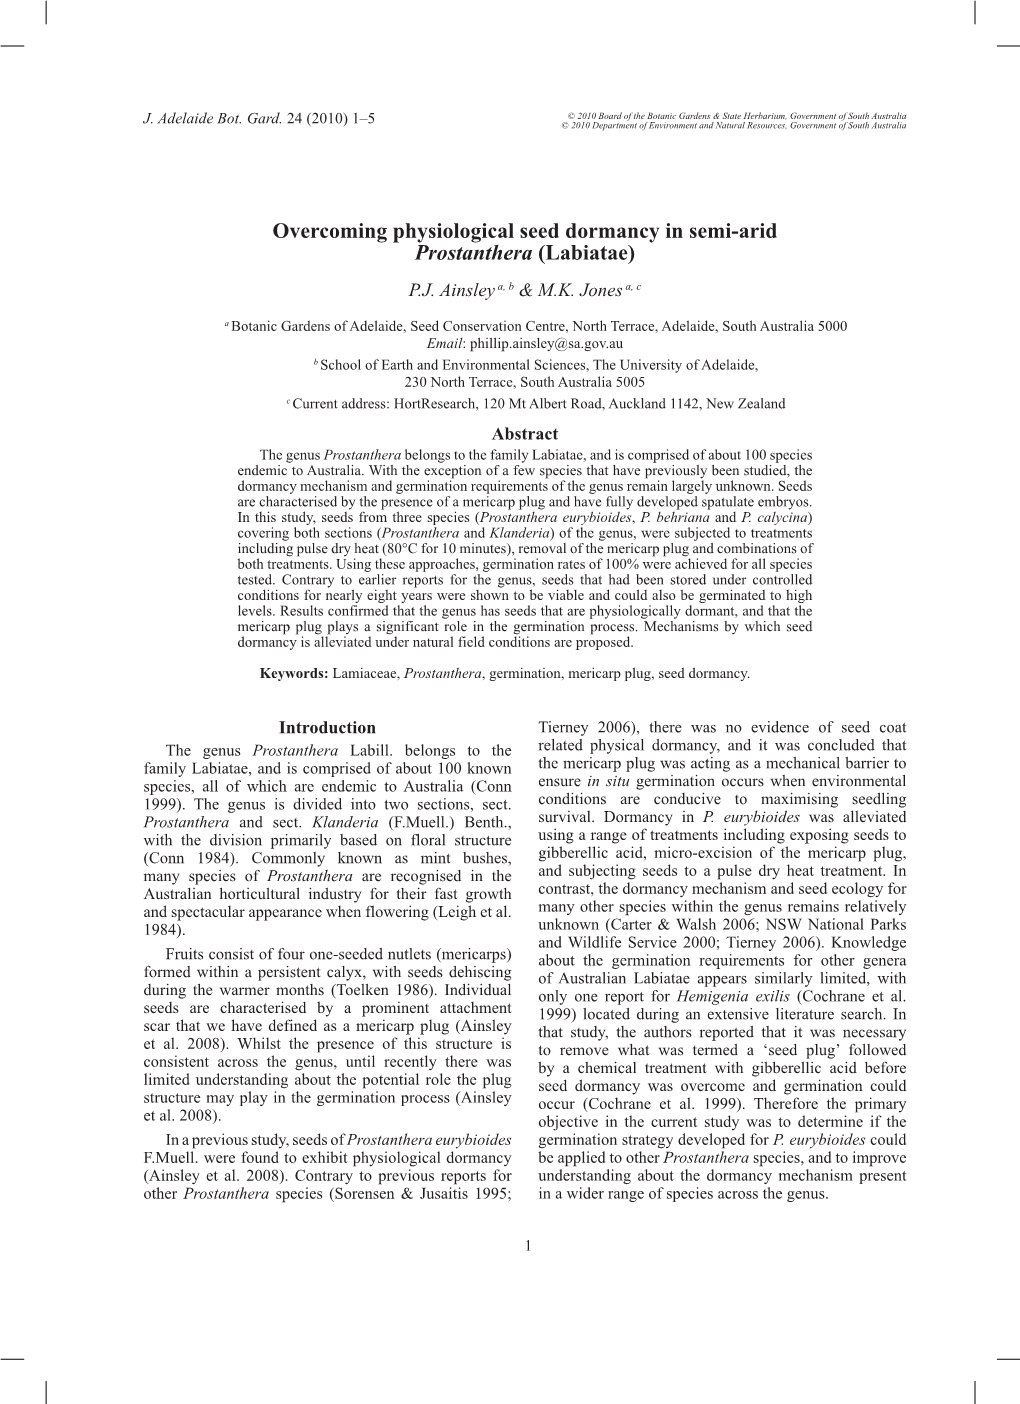 Overcoming Physiological Seed Dormancy in Semi-Arid Prostanthera (Labiatae) P.J